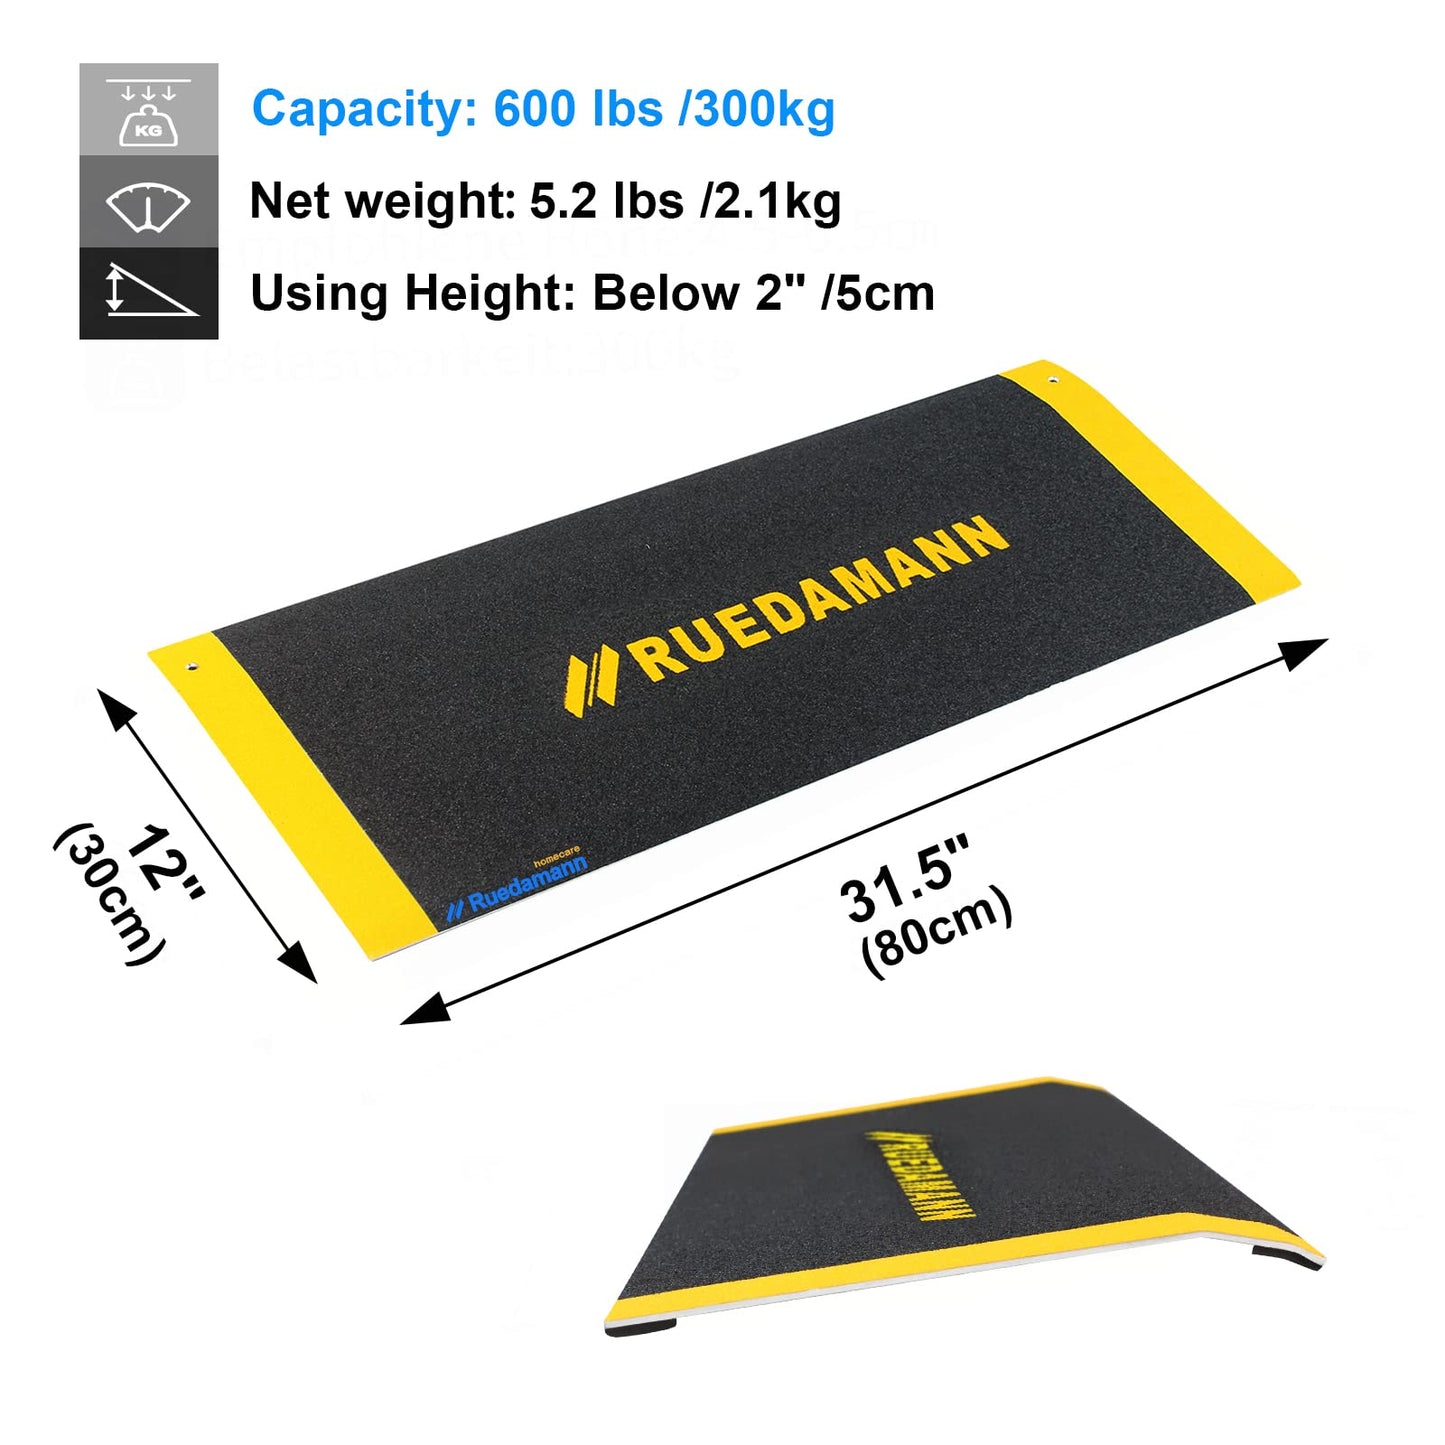 Ruedamann®Threshold Ramp Aluminum with Portable and Anti-Slip Surface